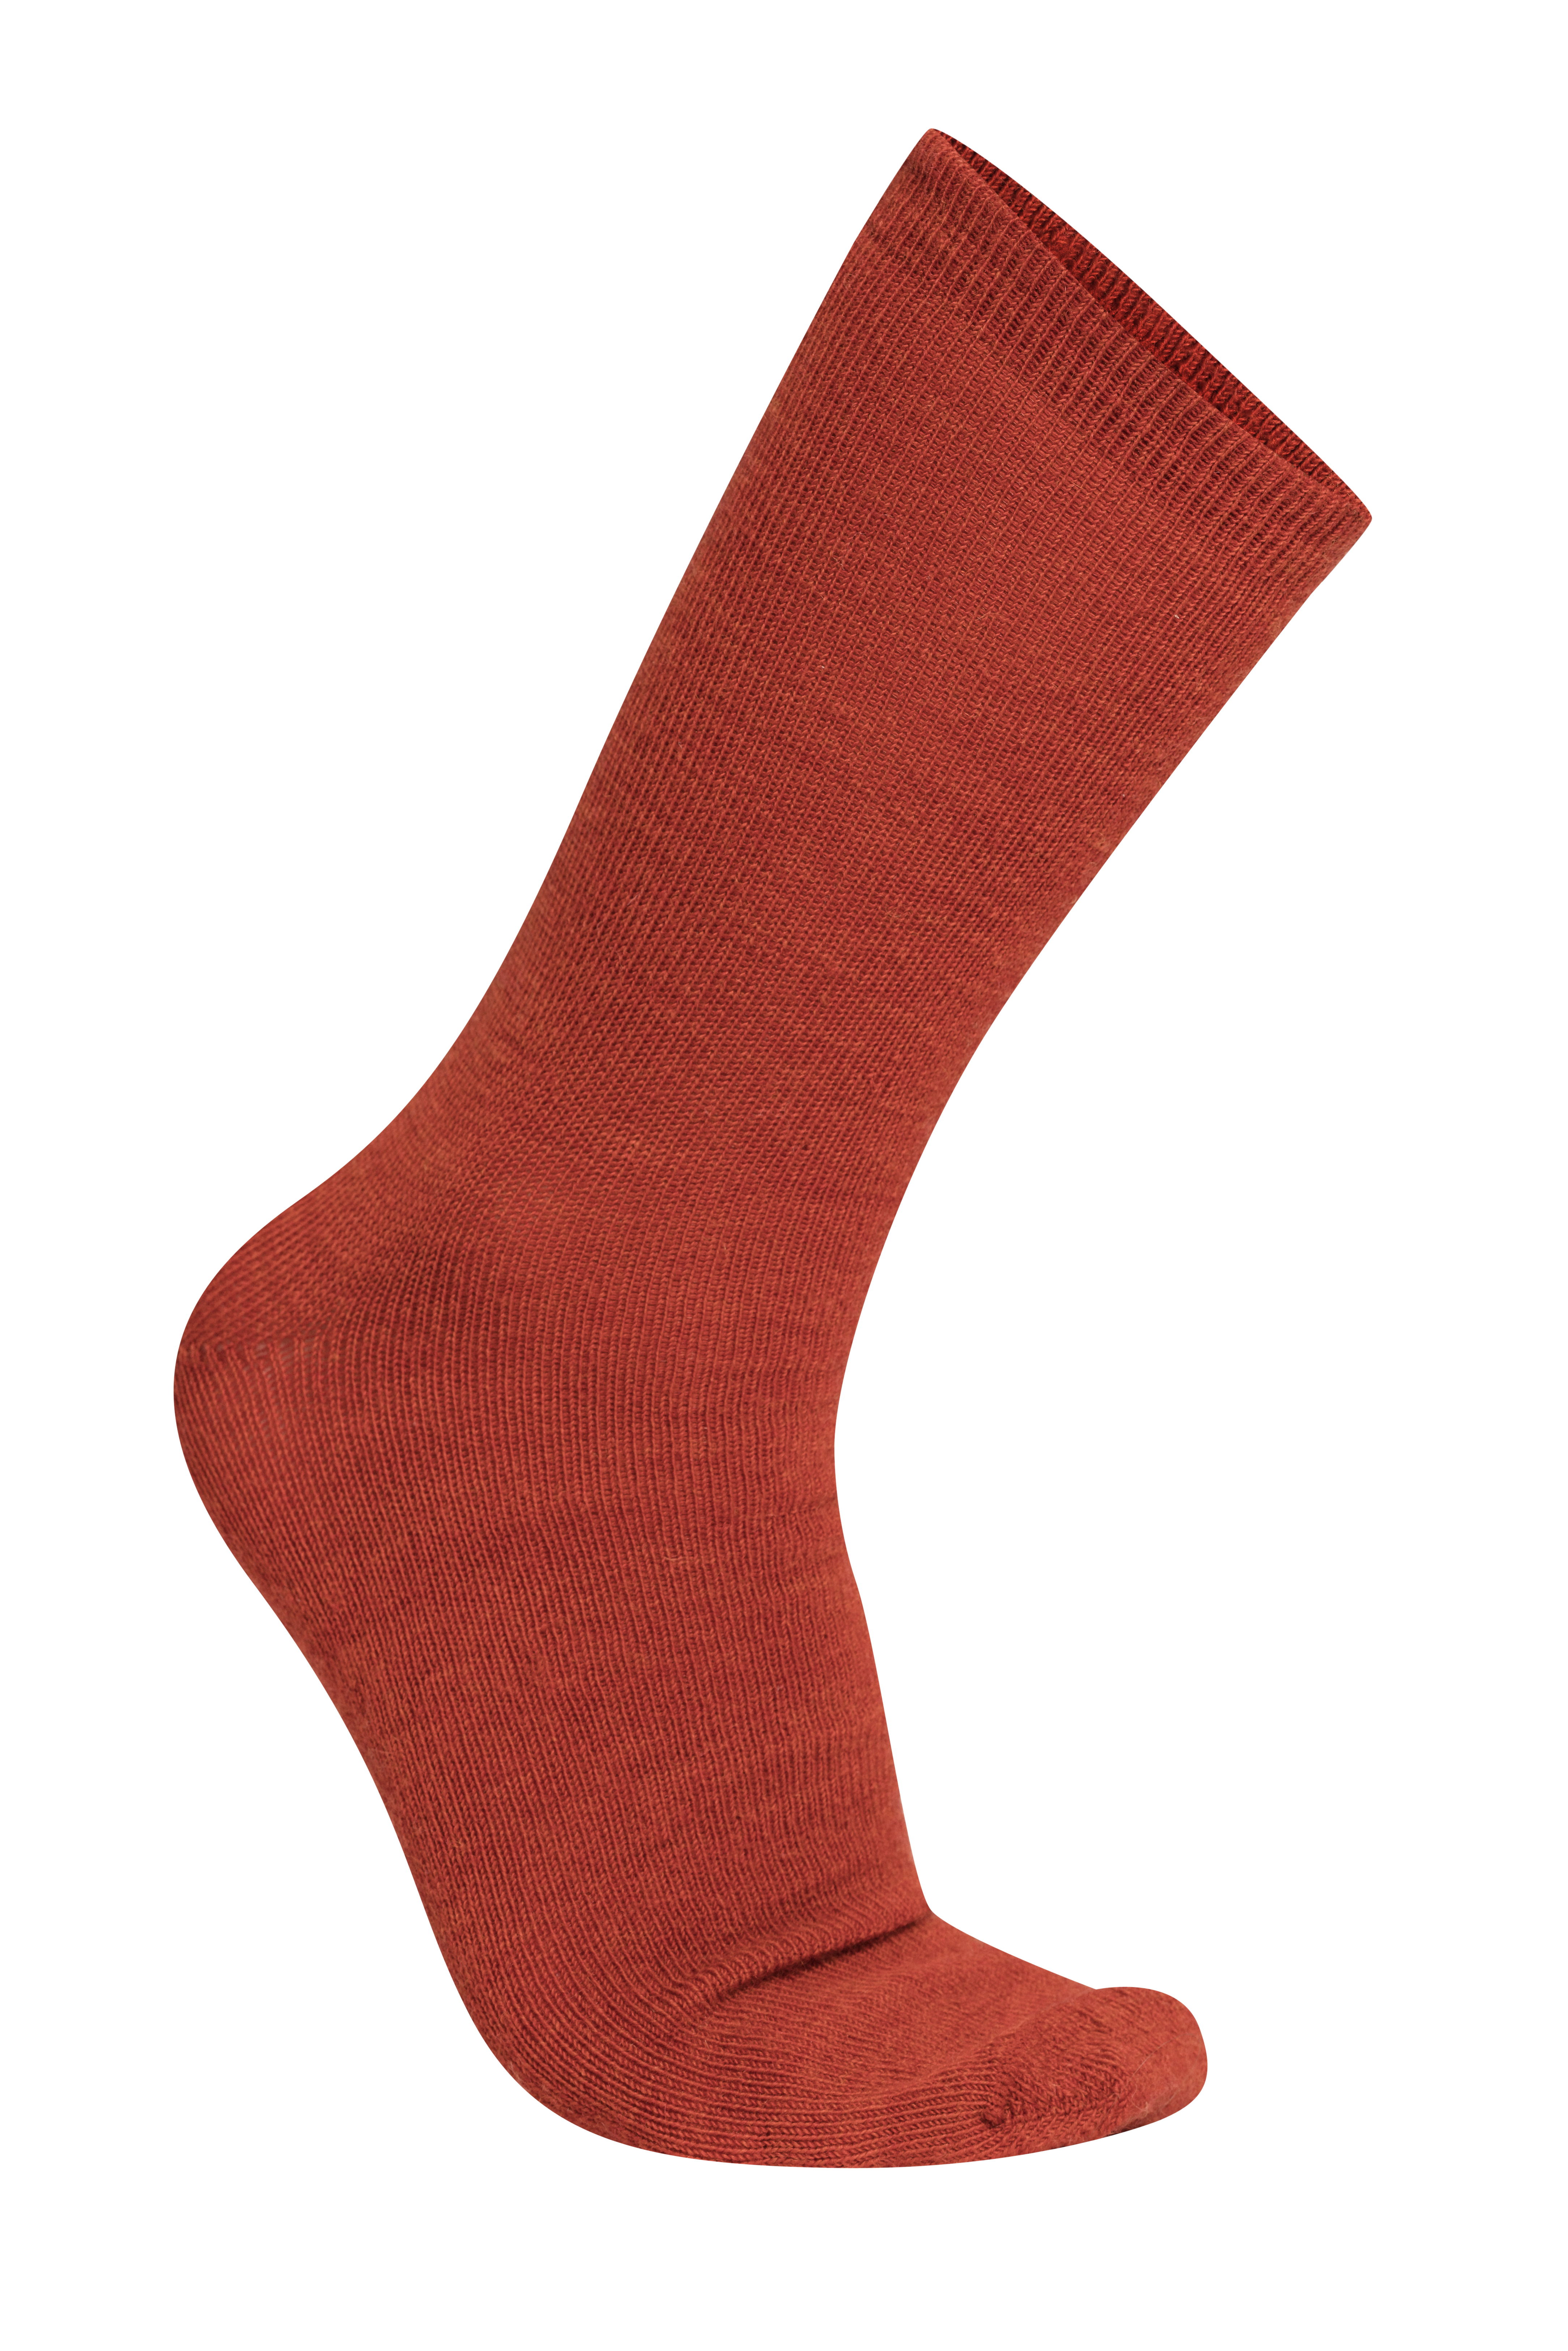 Woolpower Kids Socks Liner Classic Autumn Red